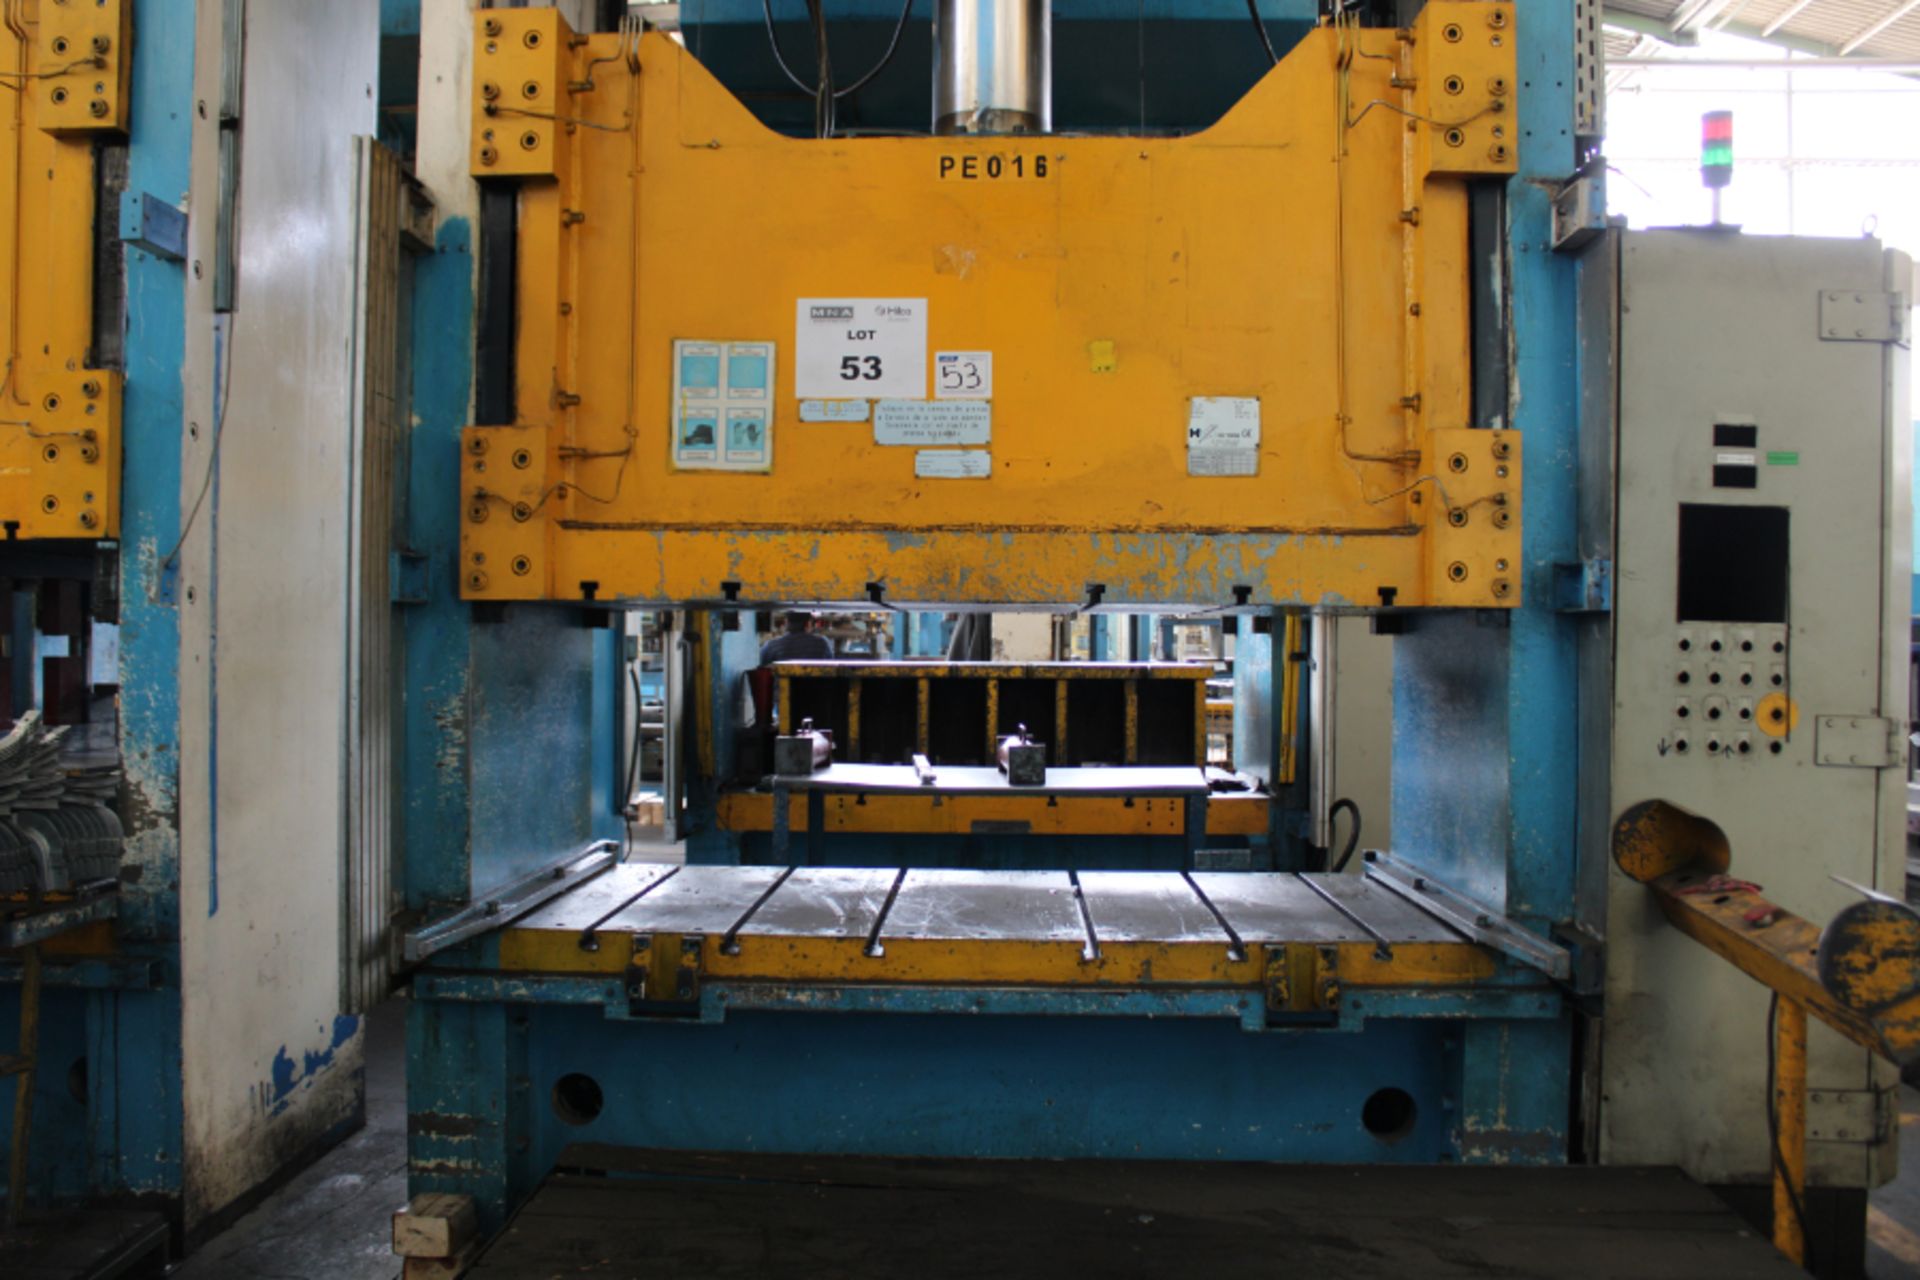 224 US Ton Hartmann Machinenbau RP 200-2000 Single Ram Mechanical Press, New 2005 - Image 4 of 6